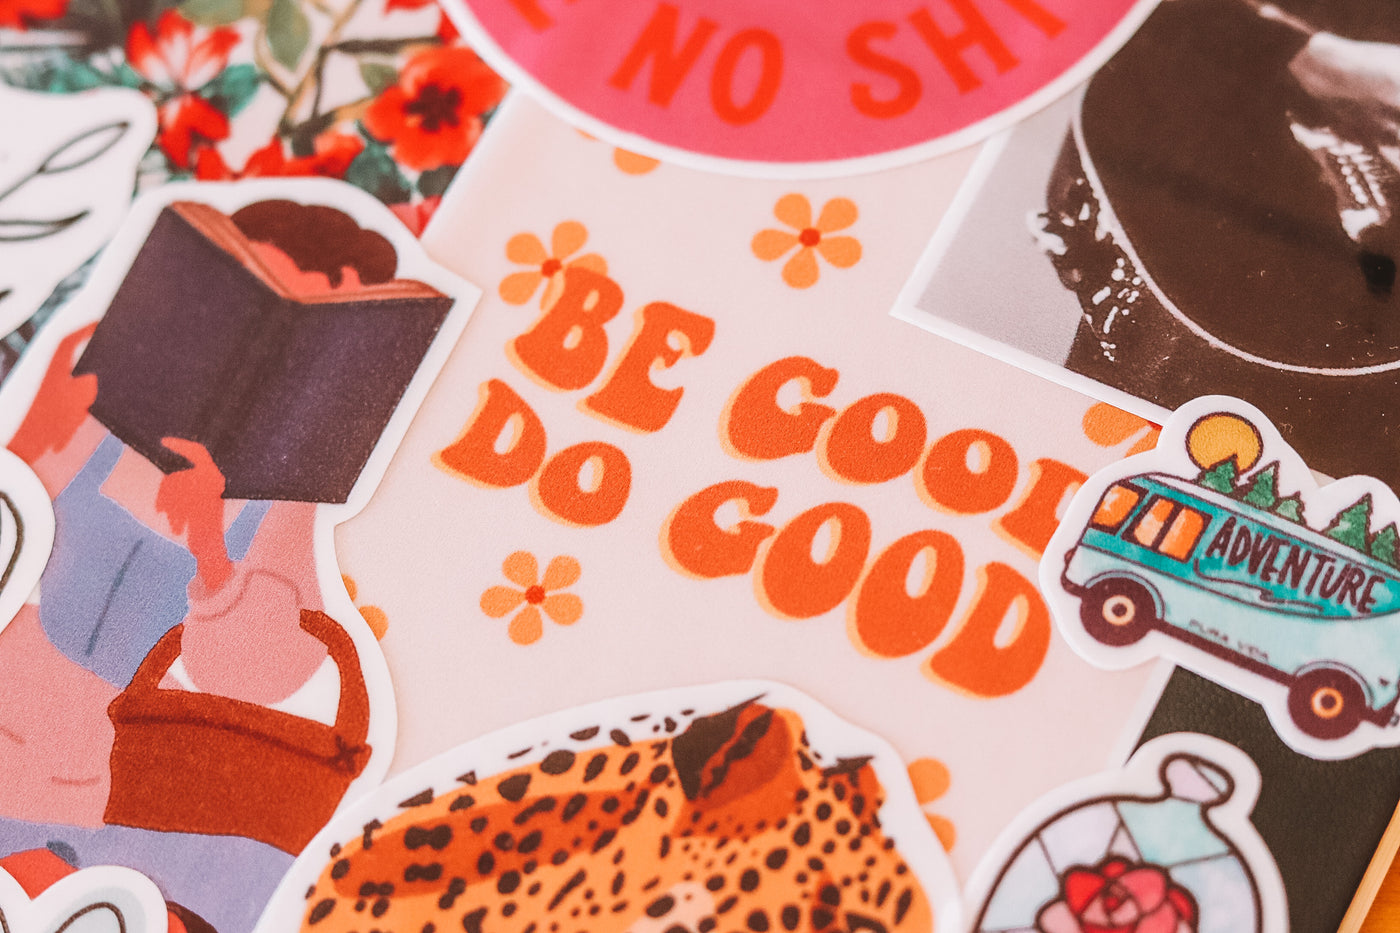 Be good, do good